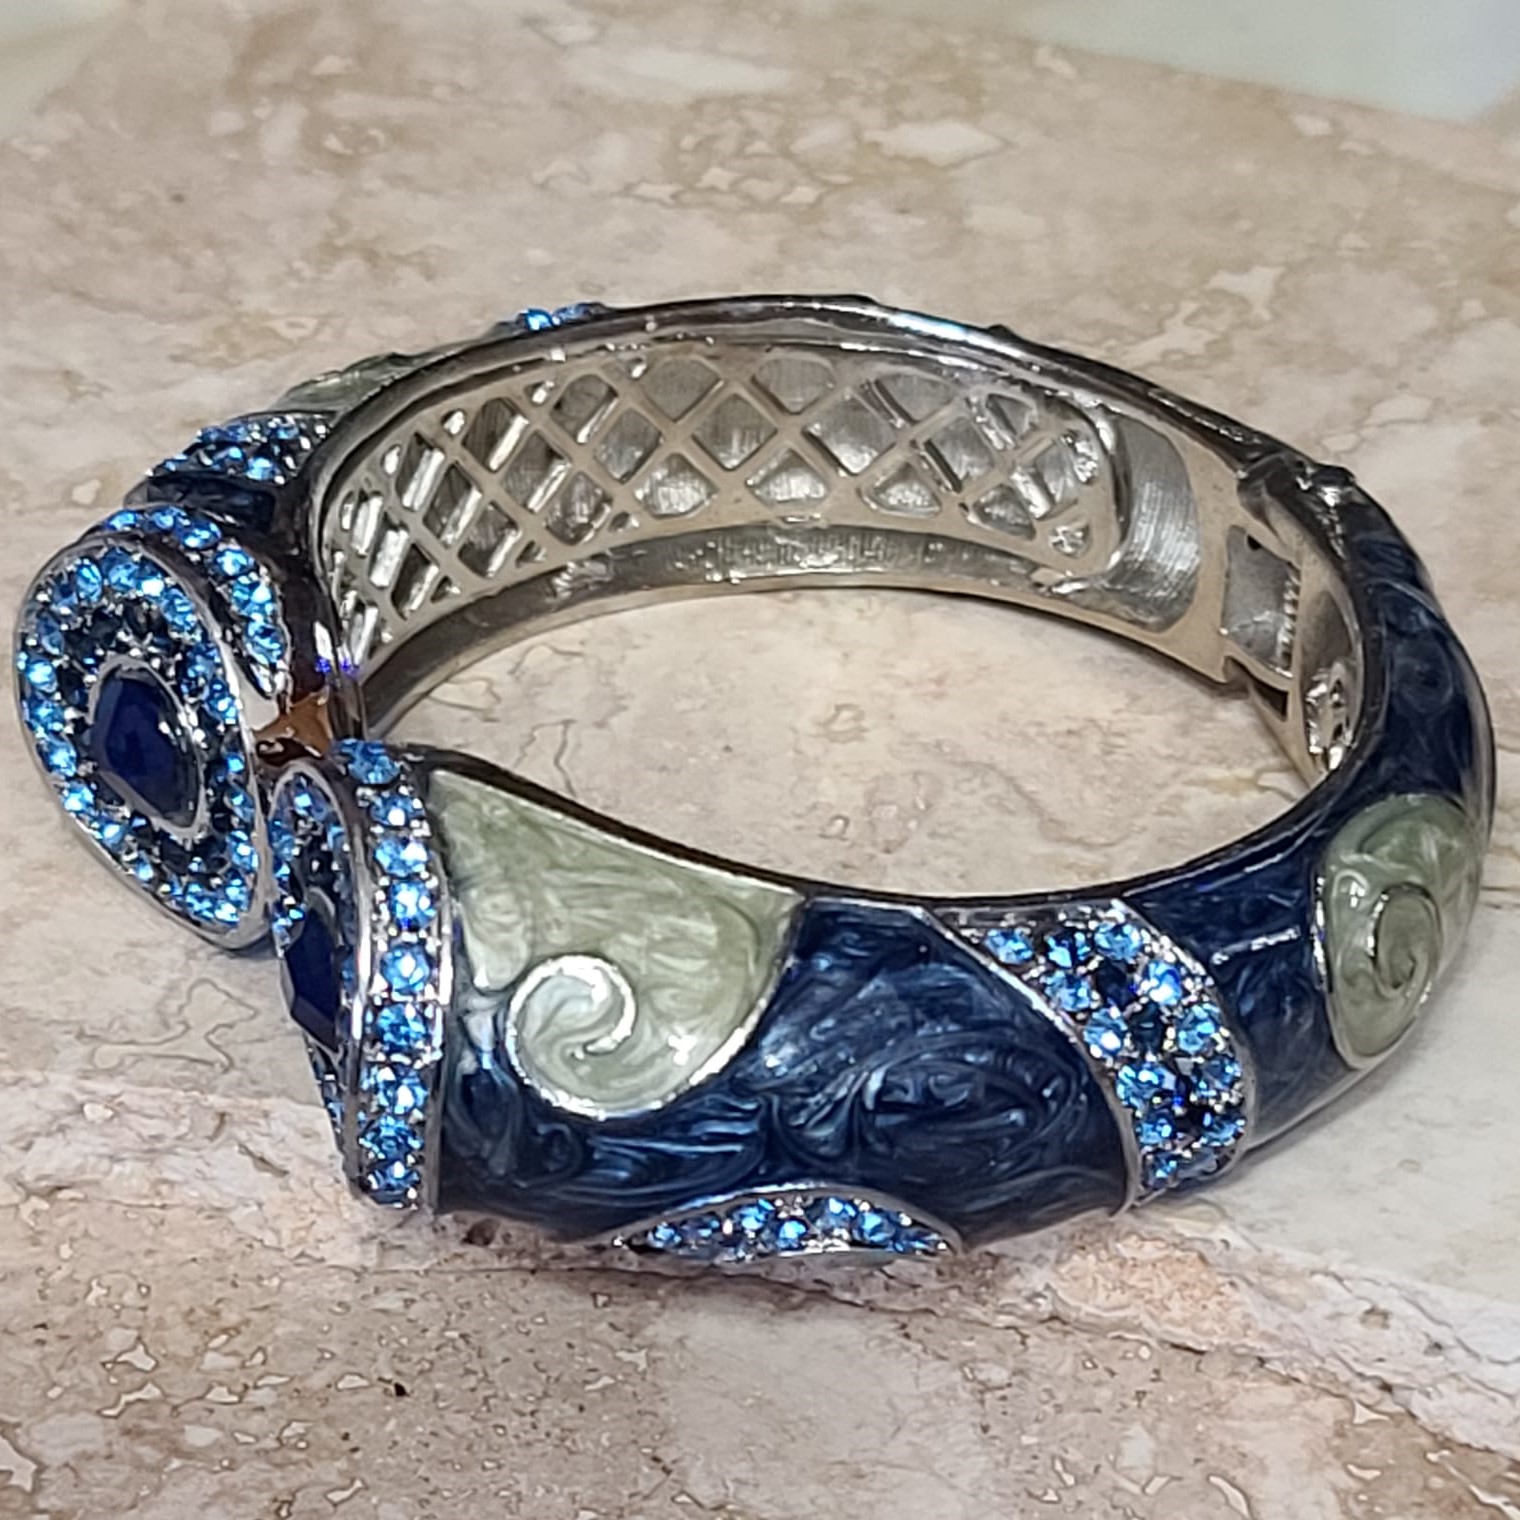 Rhinestones & Blue Enamel Foldover Bracelet